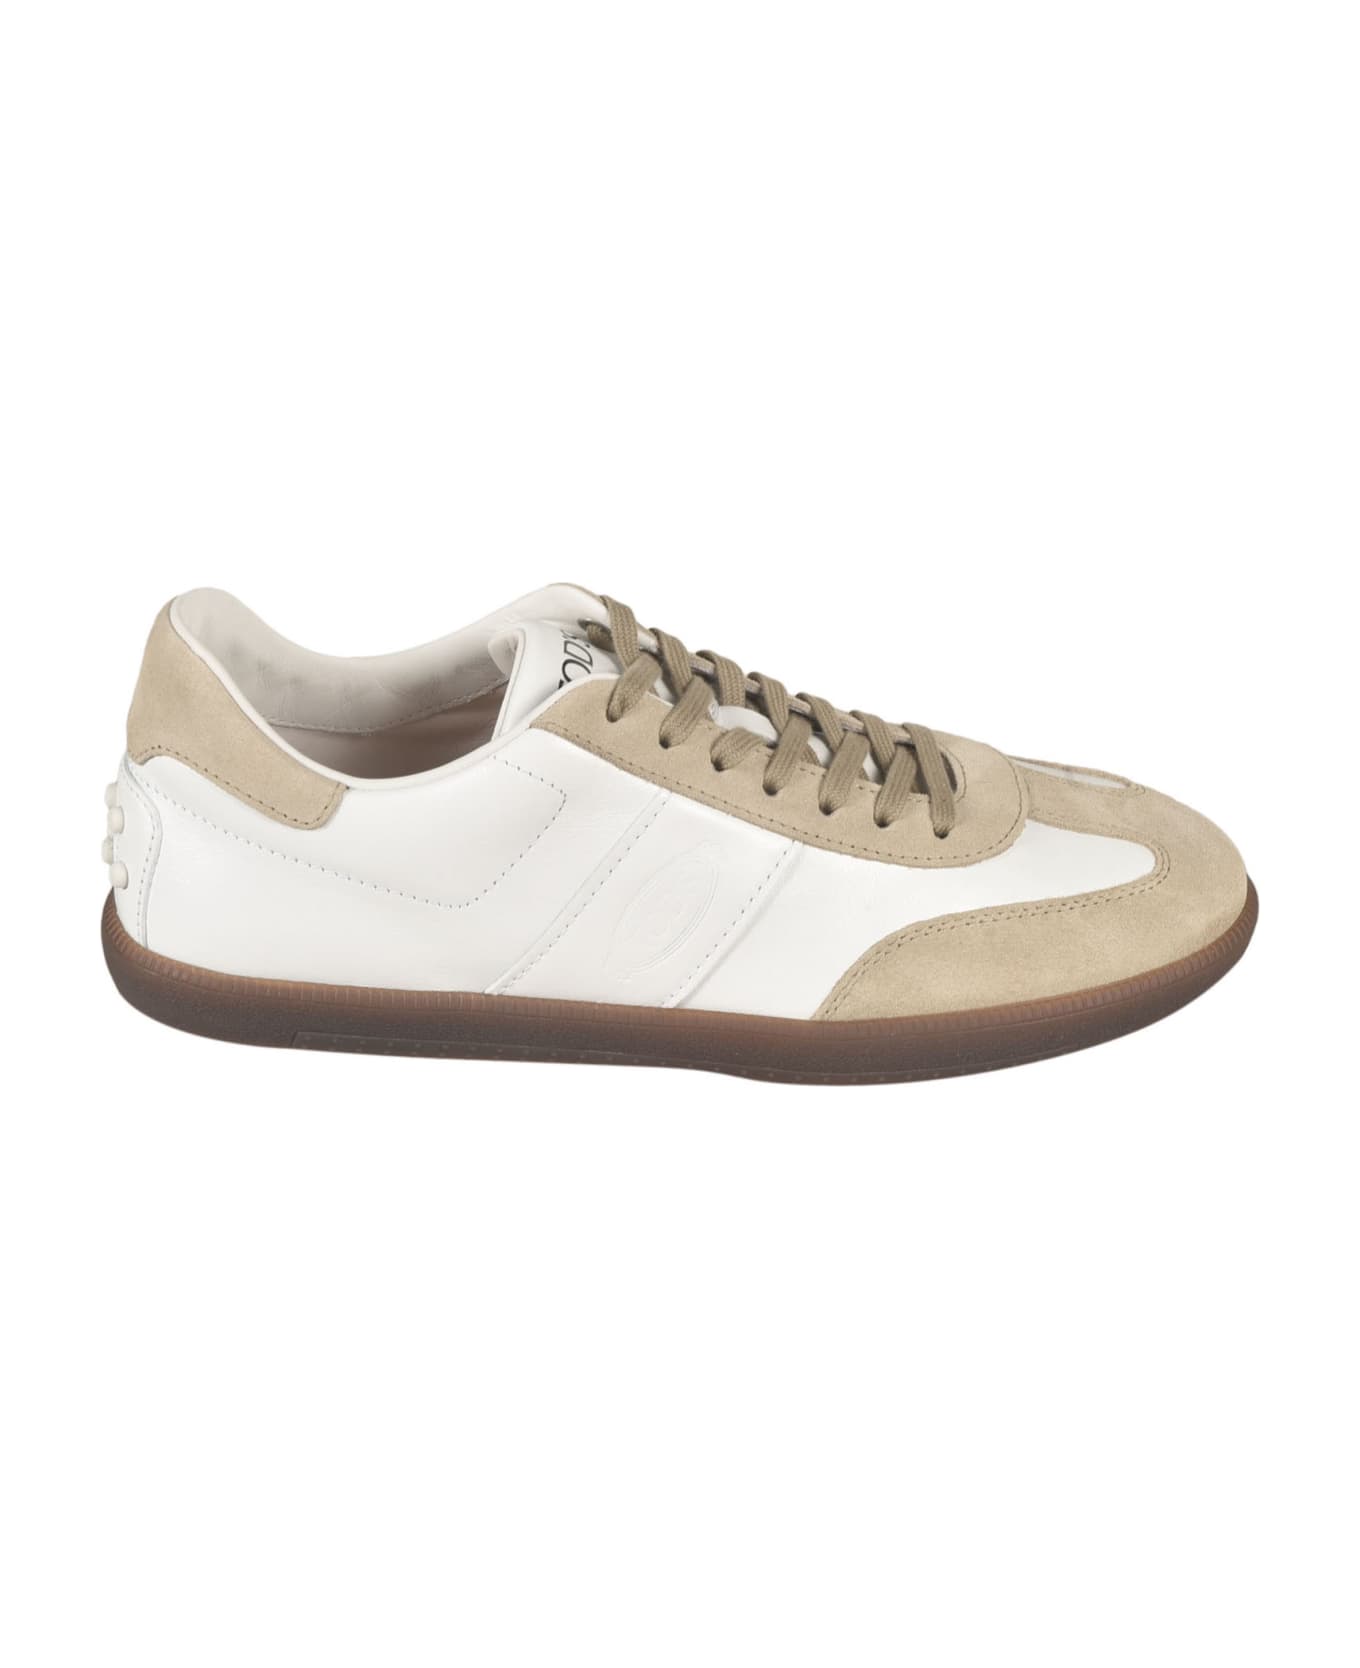 Tod's Cassetta 68c Sneakers - White